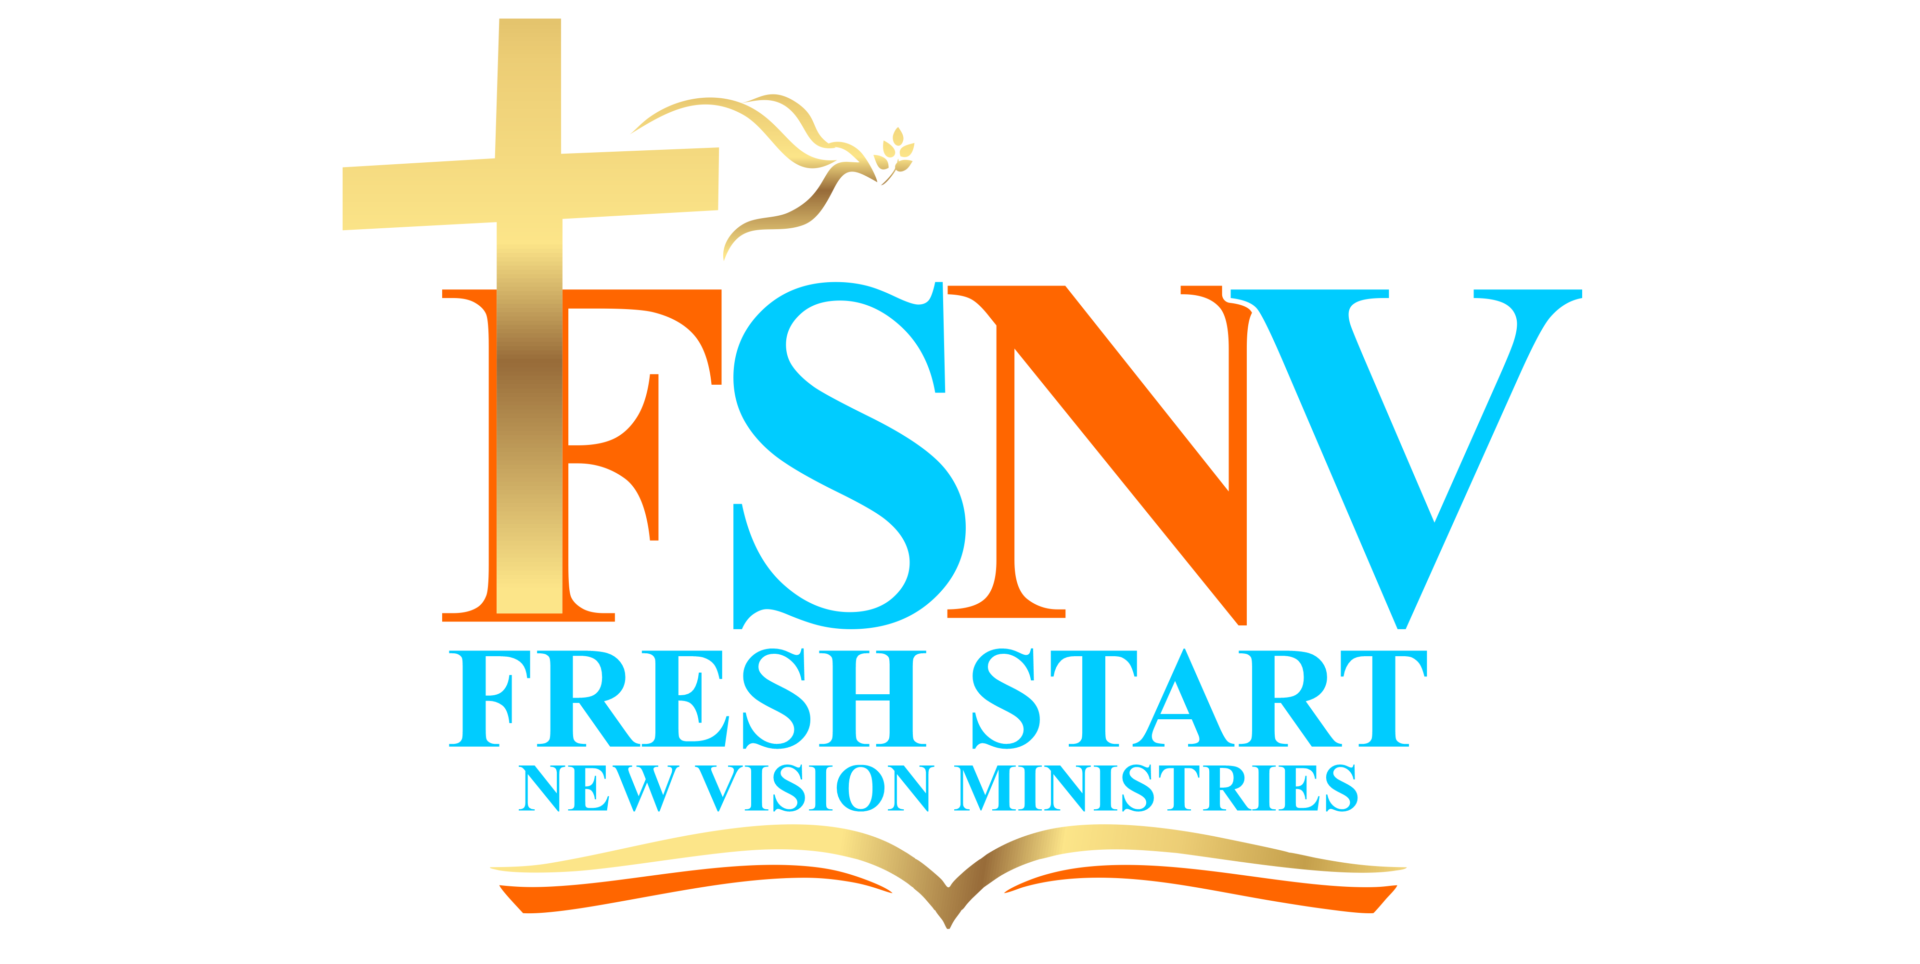 Fresh Start NEW Vision Ministries logo